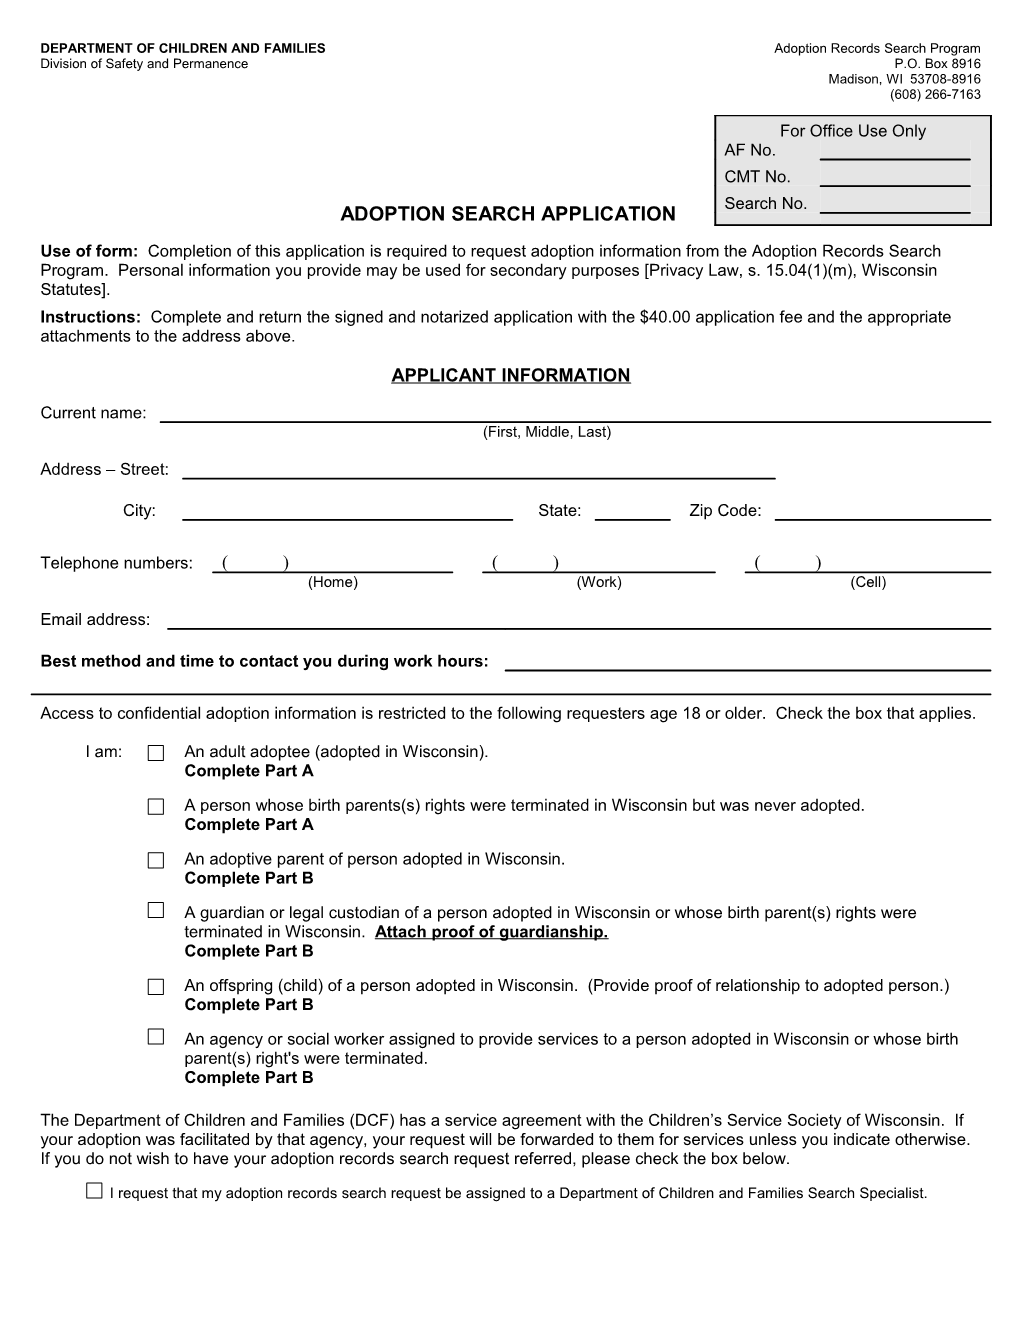 Adoption Search Application, DCF-F (CFS-0144)